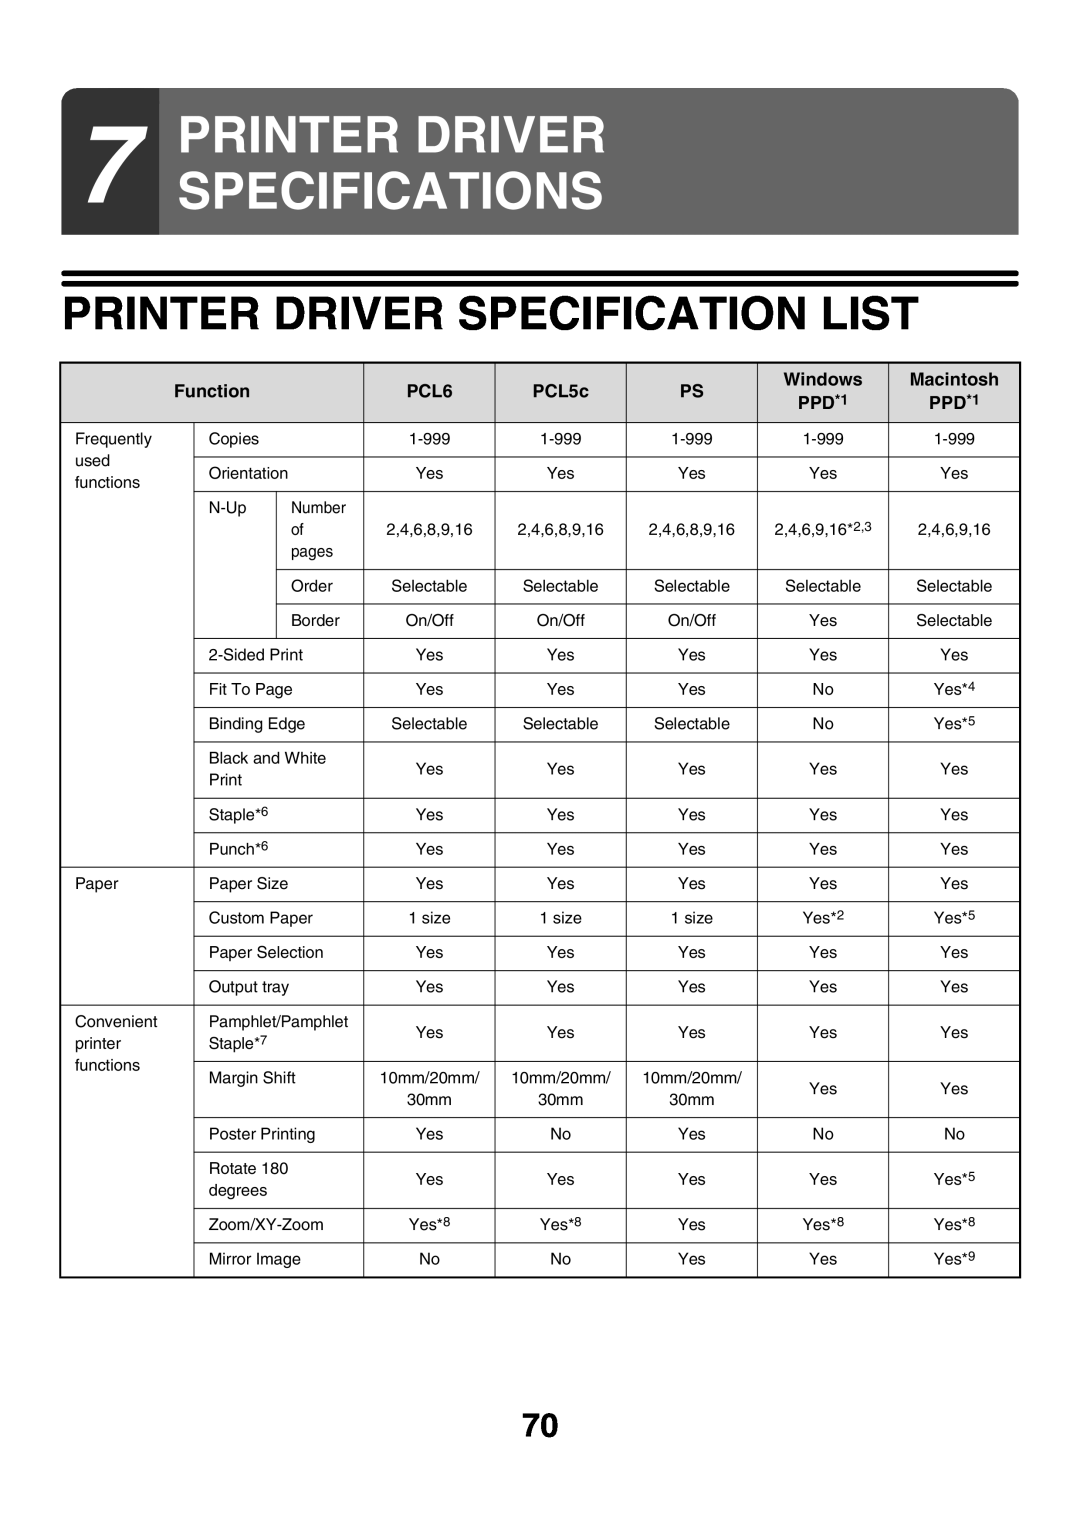 Sharp MX-7000N, MX-6200N, MX-5500N manual Printer Driver Specifications, Printer Driver Specification List 